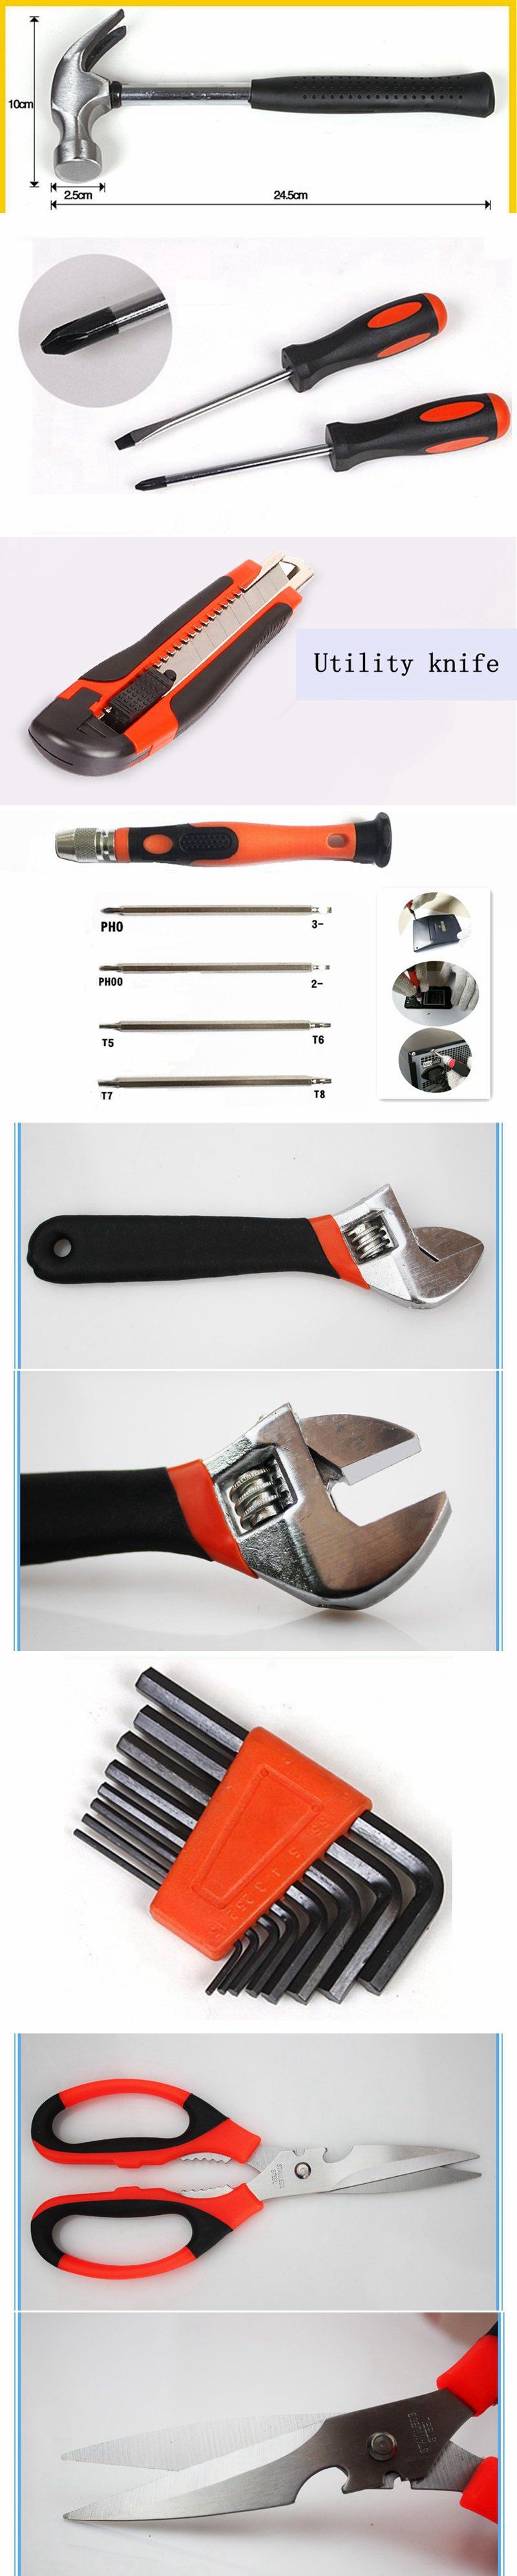 Raitooltrade-45Pcs-Multifunctional-Tools-Set-Carbon-Steel-Household-Wood-Working-Kits-1209149